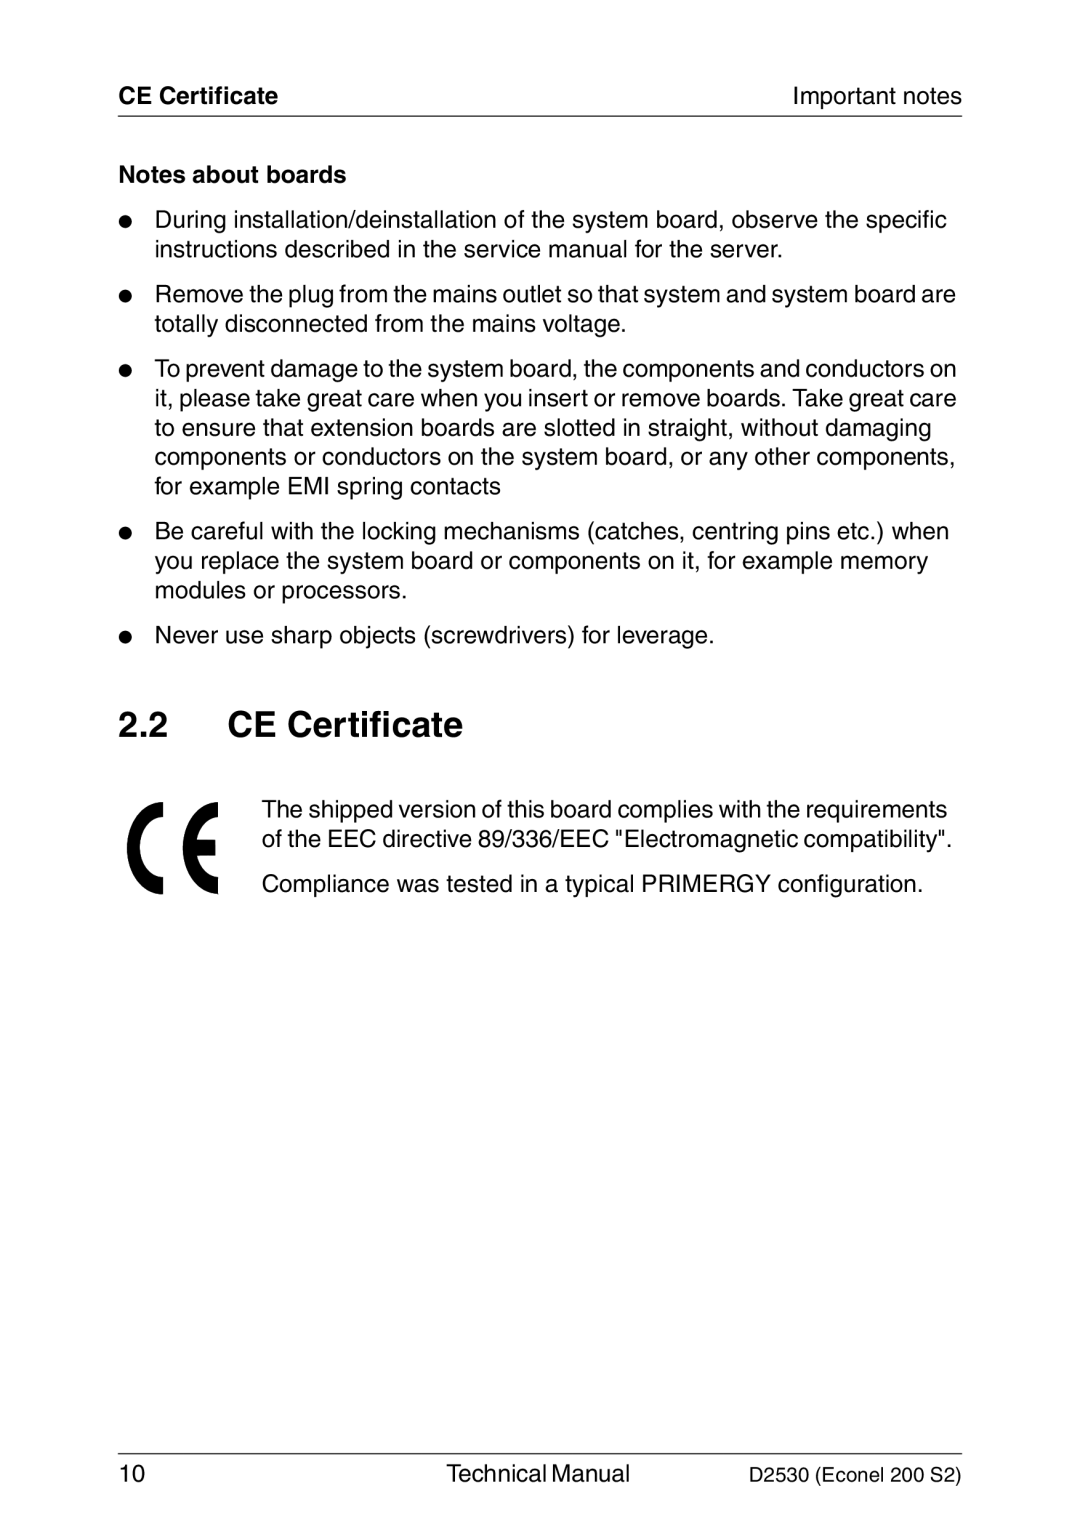 Fujitsu D2530 technical manual CE Certificate 